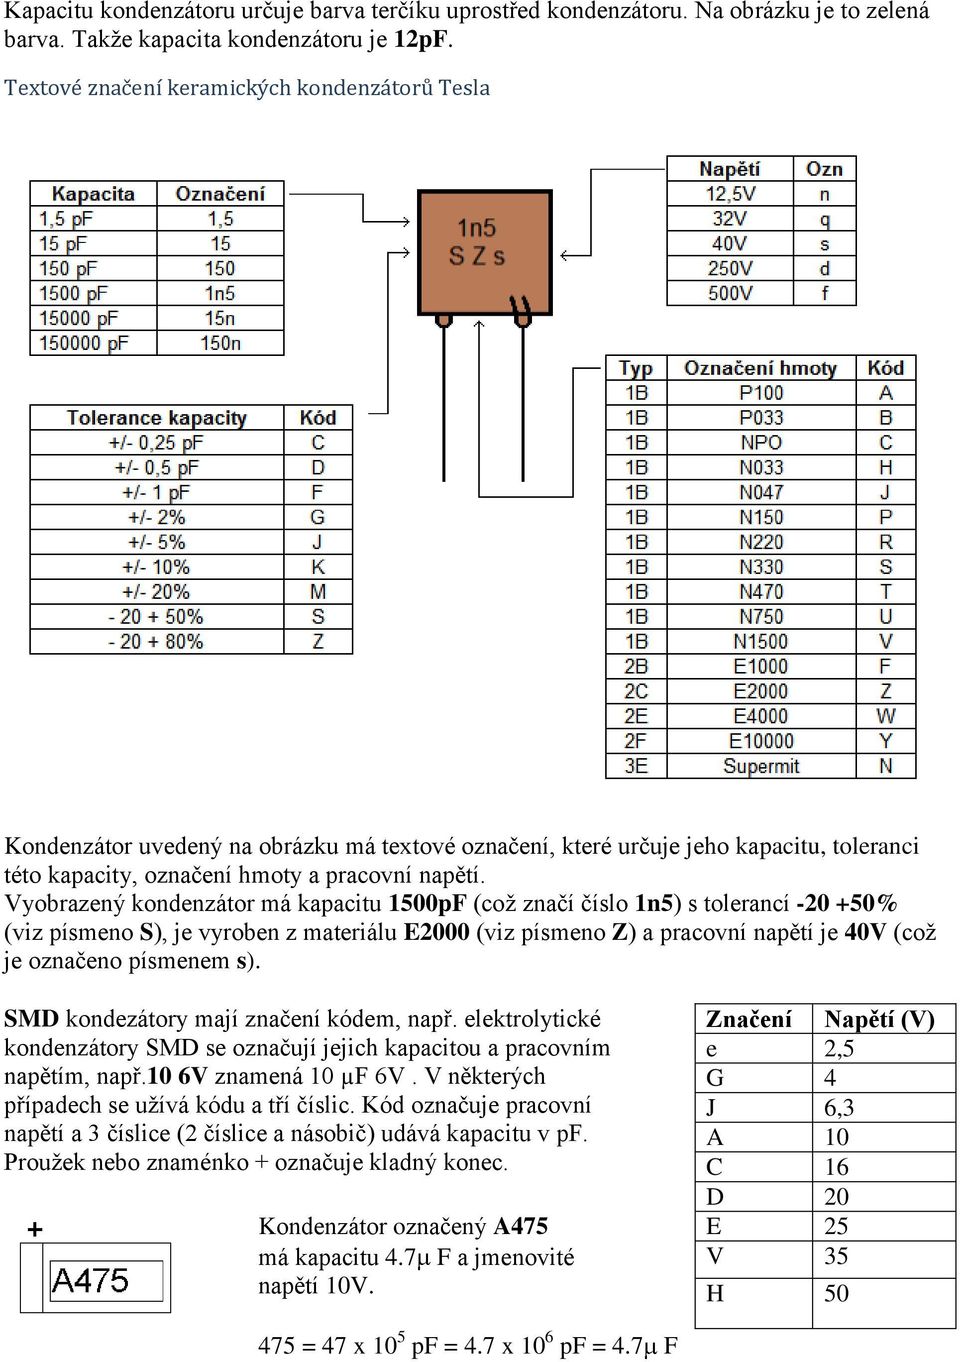 Vyobrazený kondenzátor má kapacitu 1500pF (což značí číslo 1n5) s tolerancí -20 +50% (viz písmeno S), je vyroben z materiálu E2000 (viz písmeno Z) a pracovní napětí je 40V (což je označeno písmenem